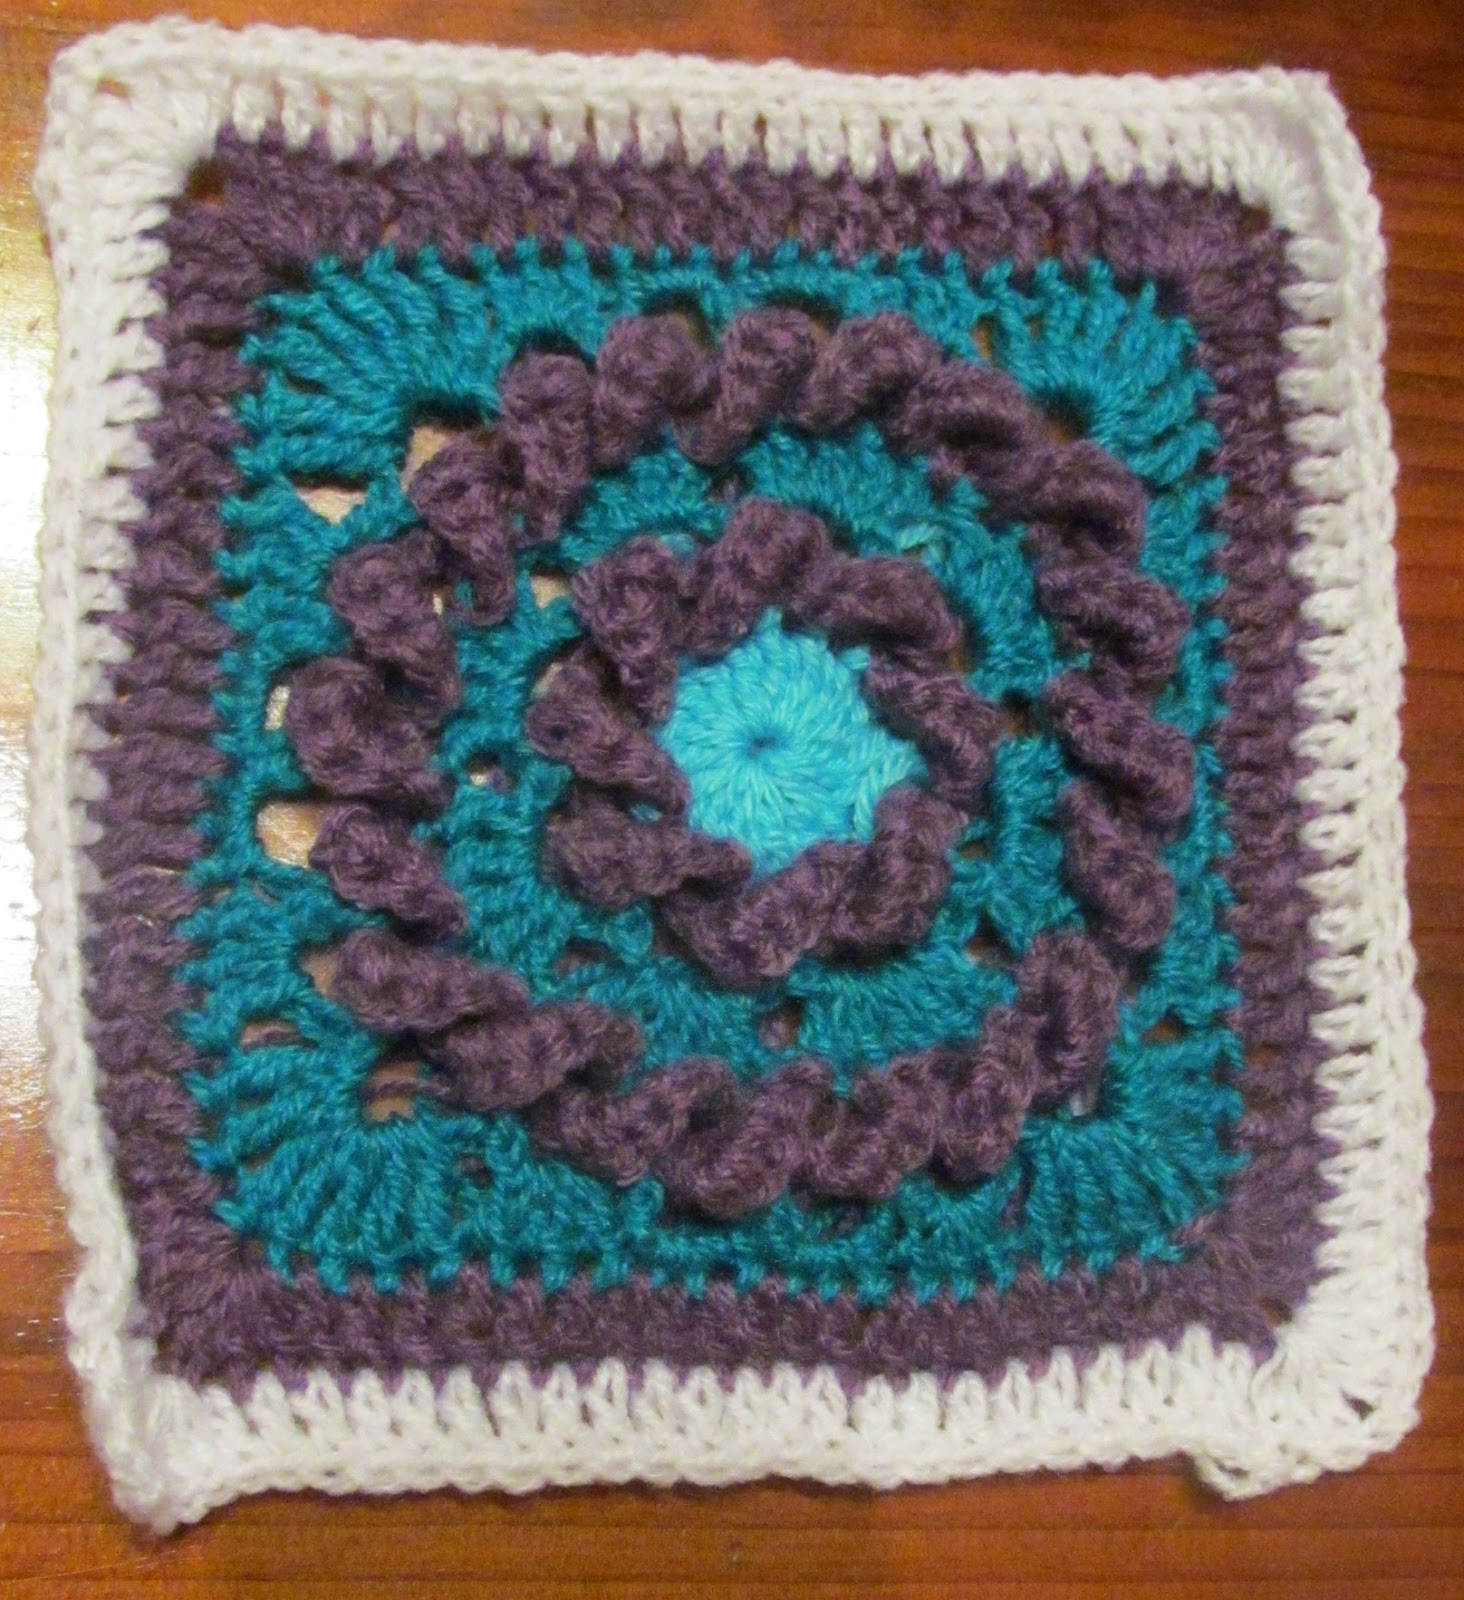 12 Granny Square Crochet Pattern Knot Your Nanas Crochet Granny Square Crochet Along Revisited